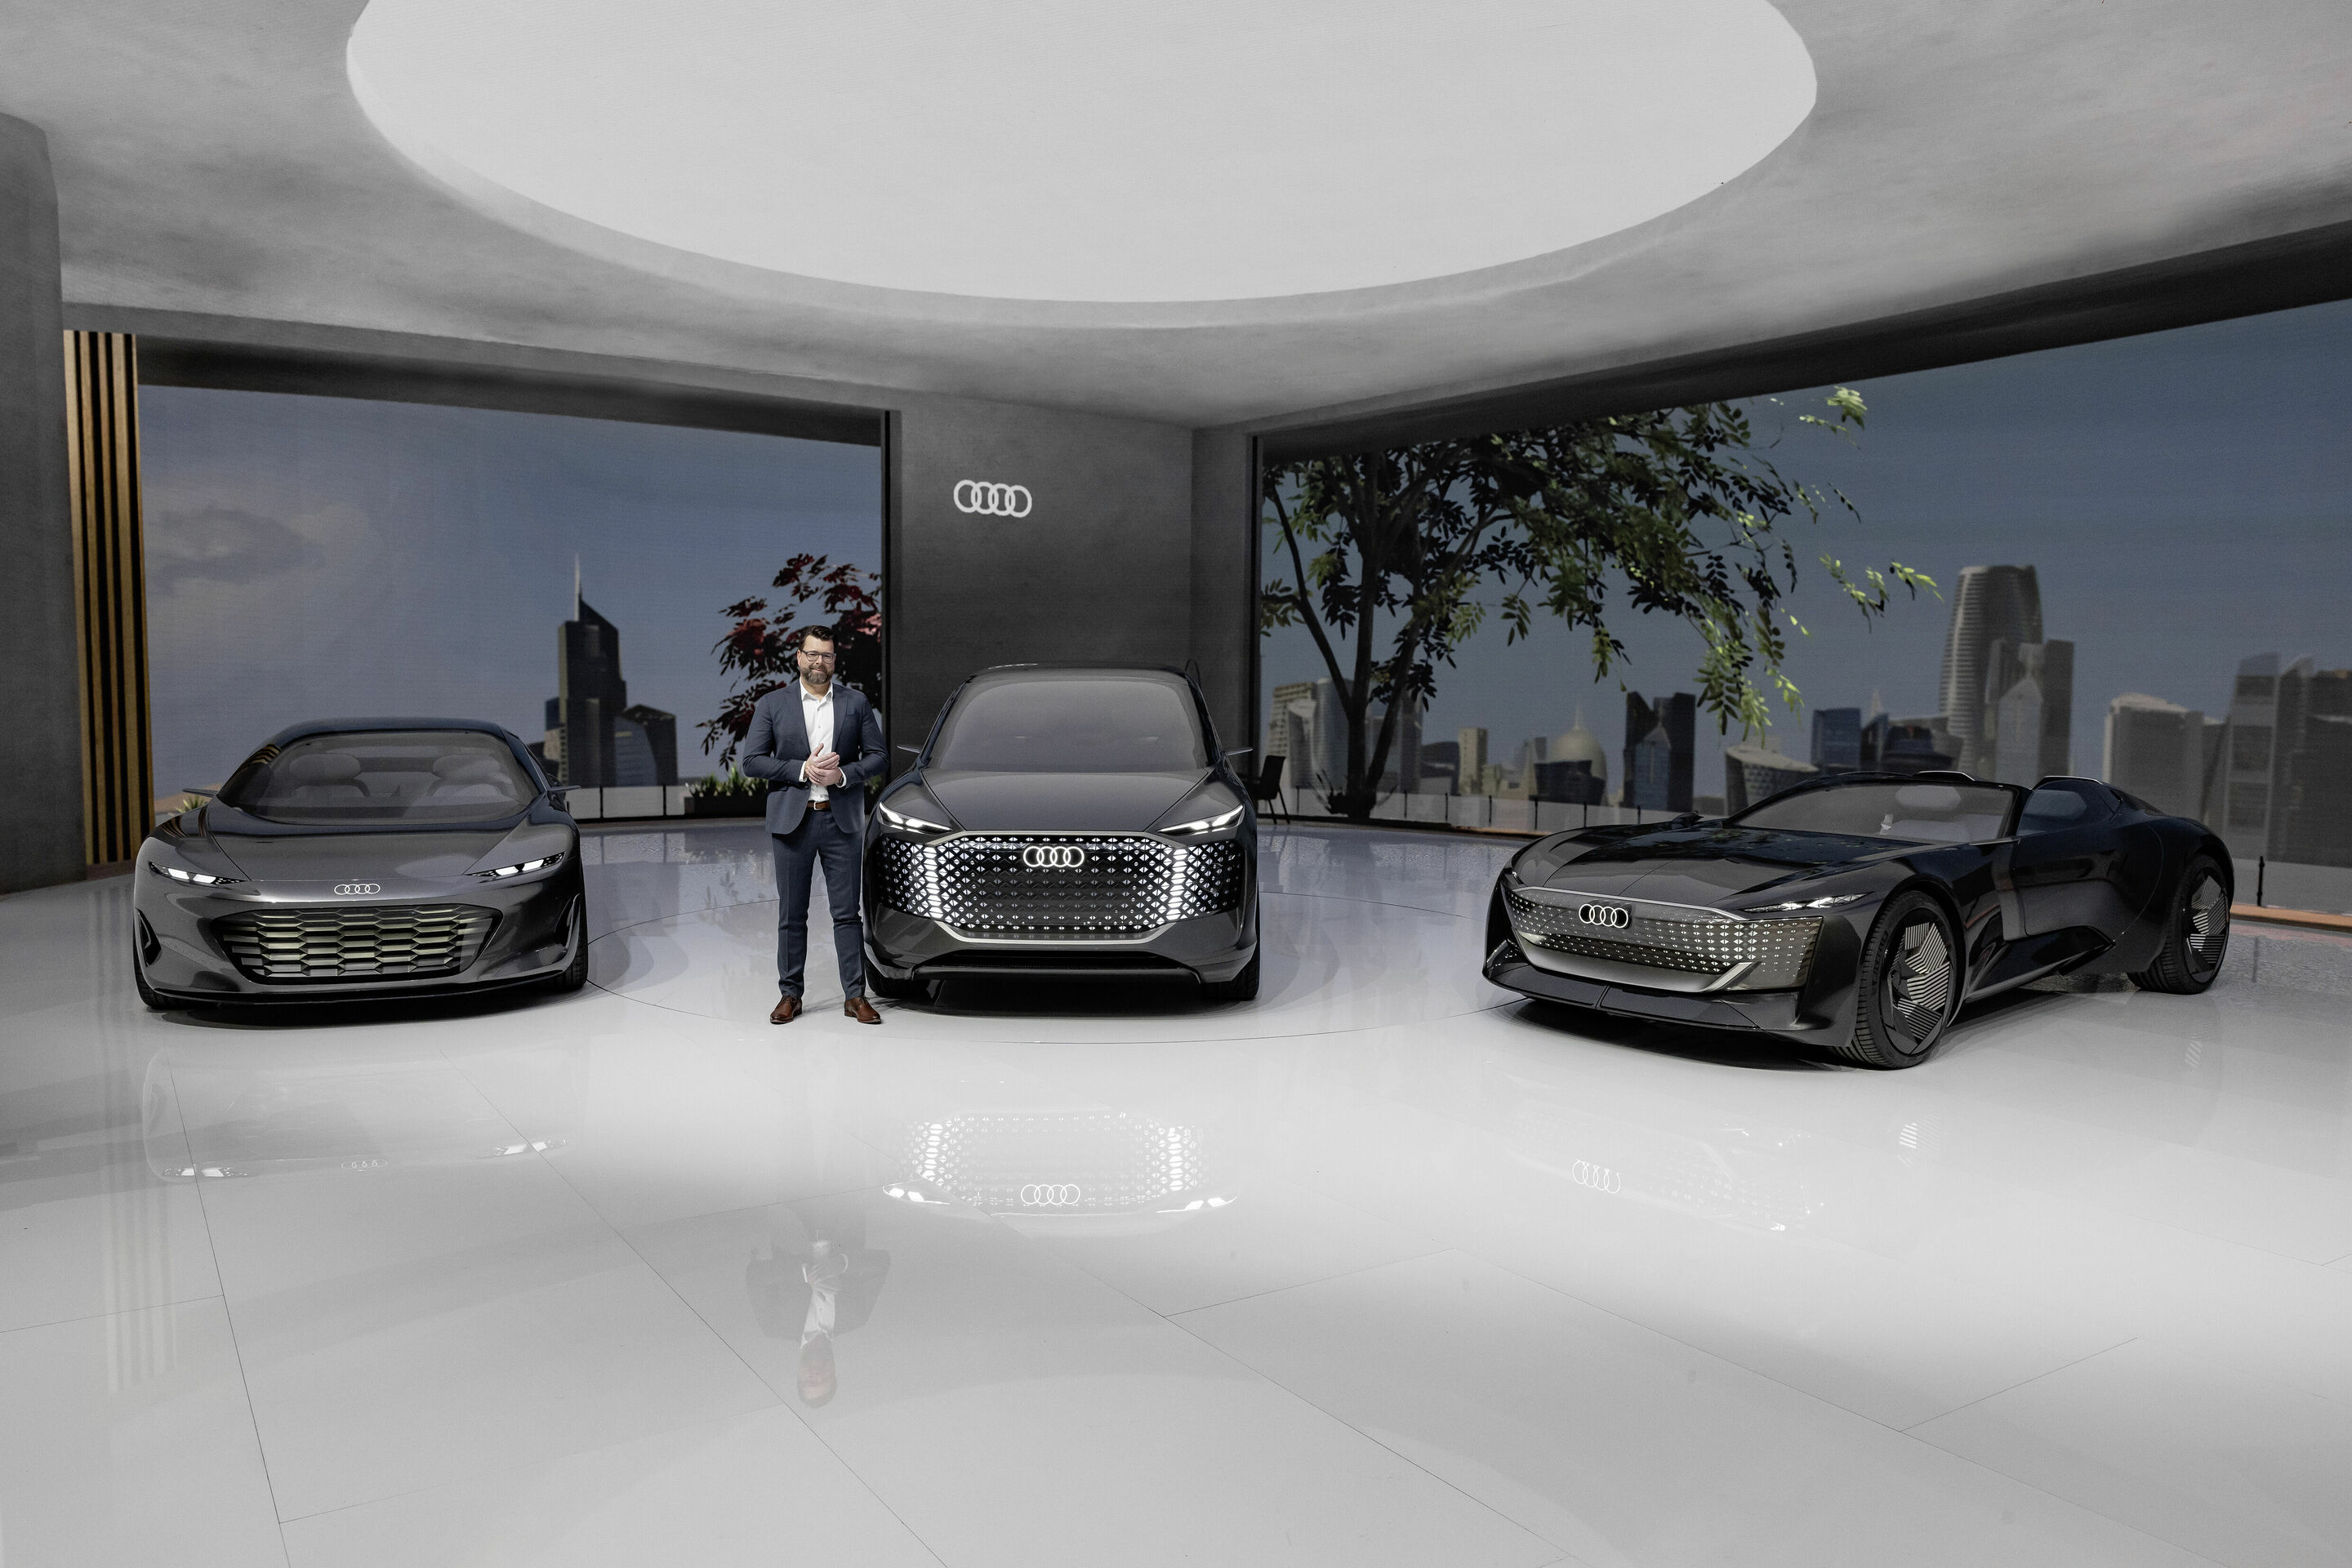 World Premiere Audi urbansphere concept – Celebration of Progress